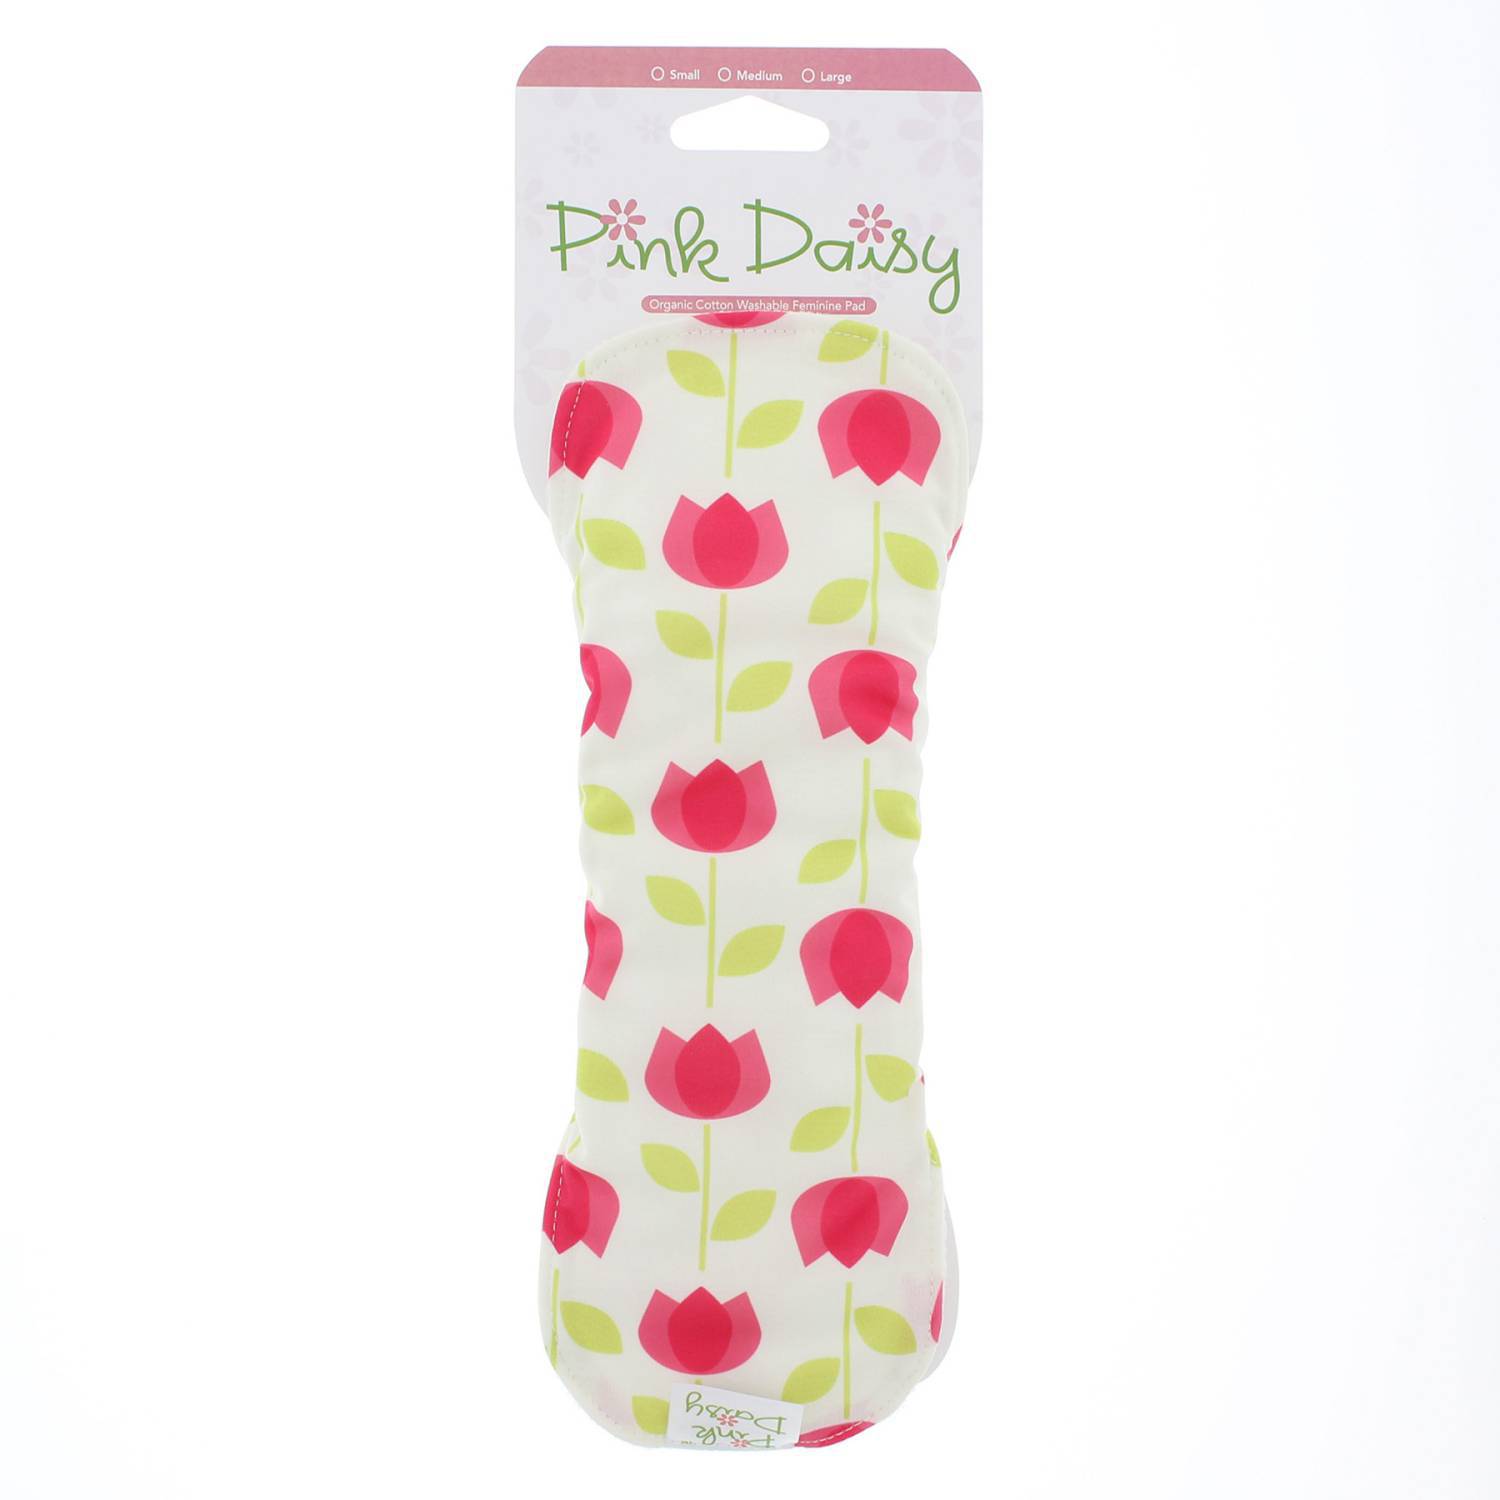 Pink Daisy Cloth Pads (Organic Cotton)